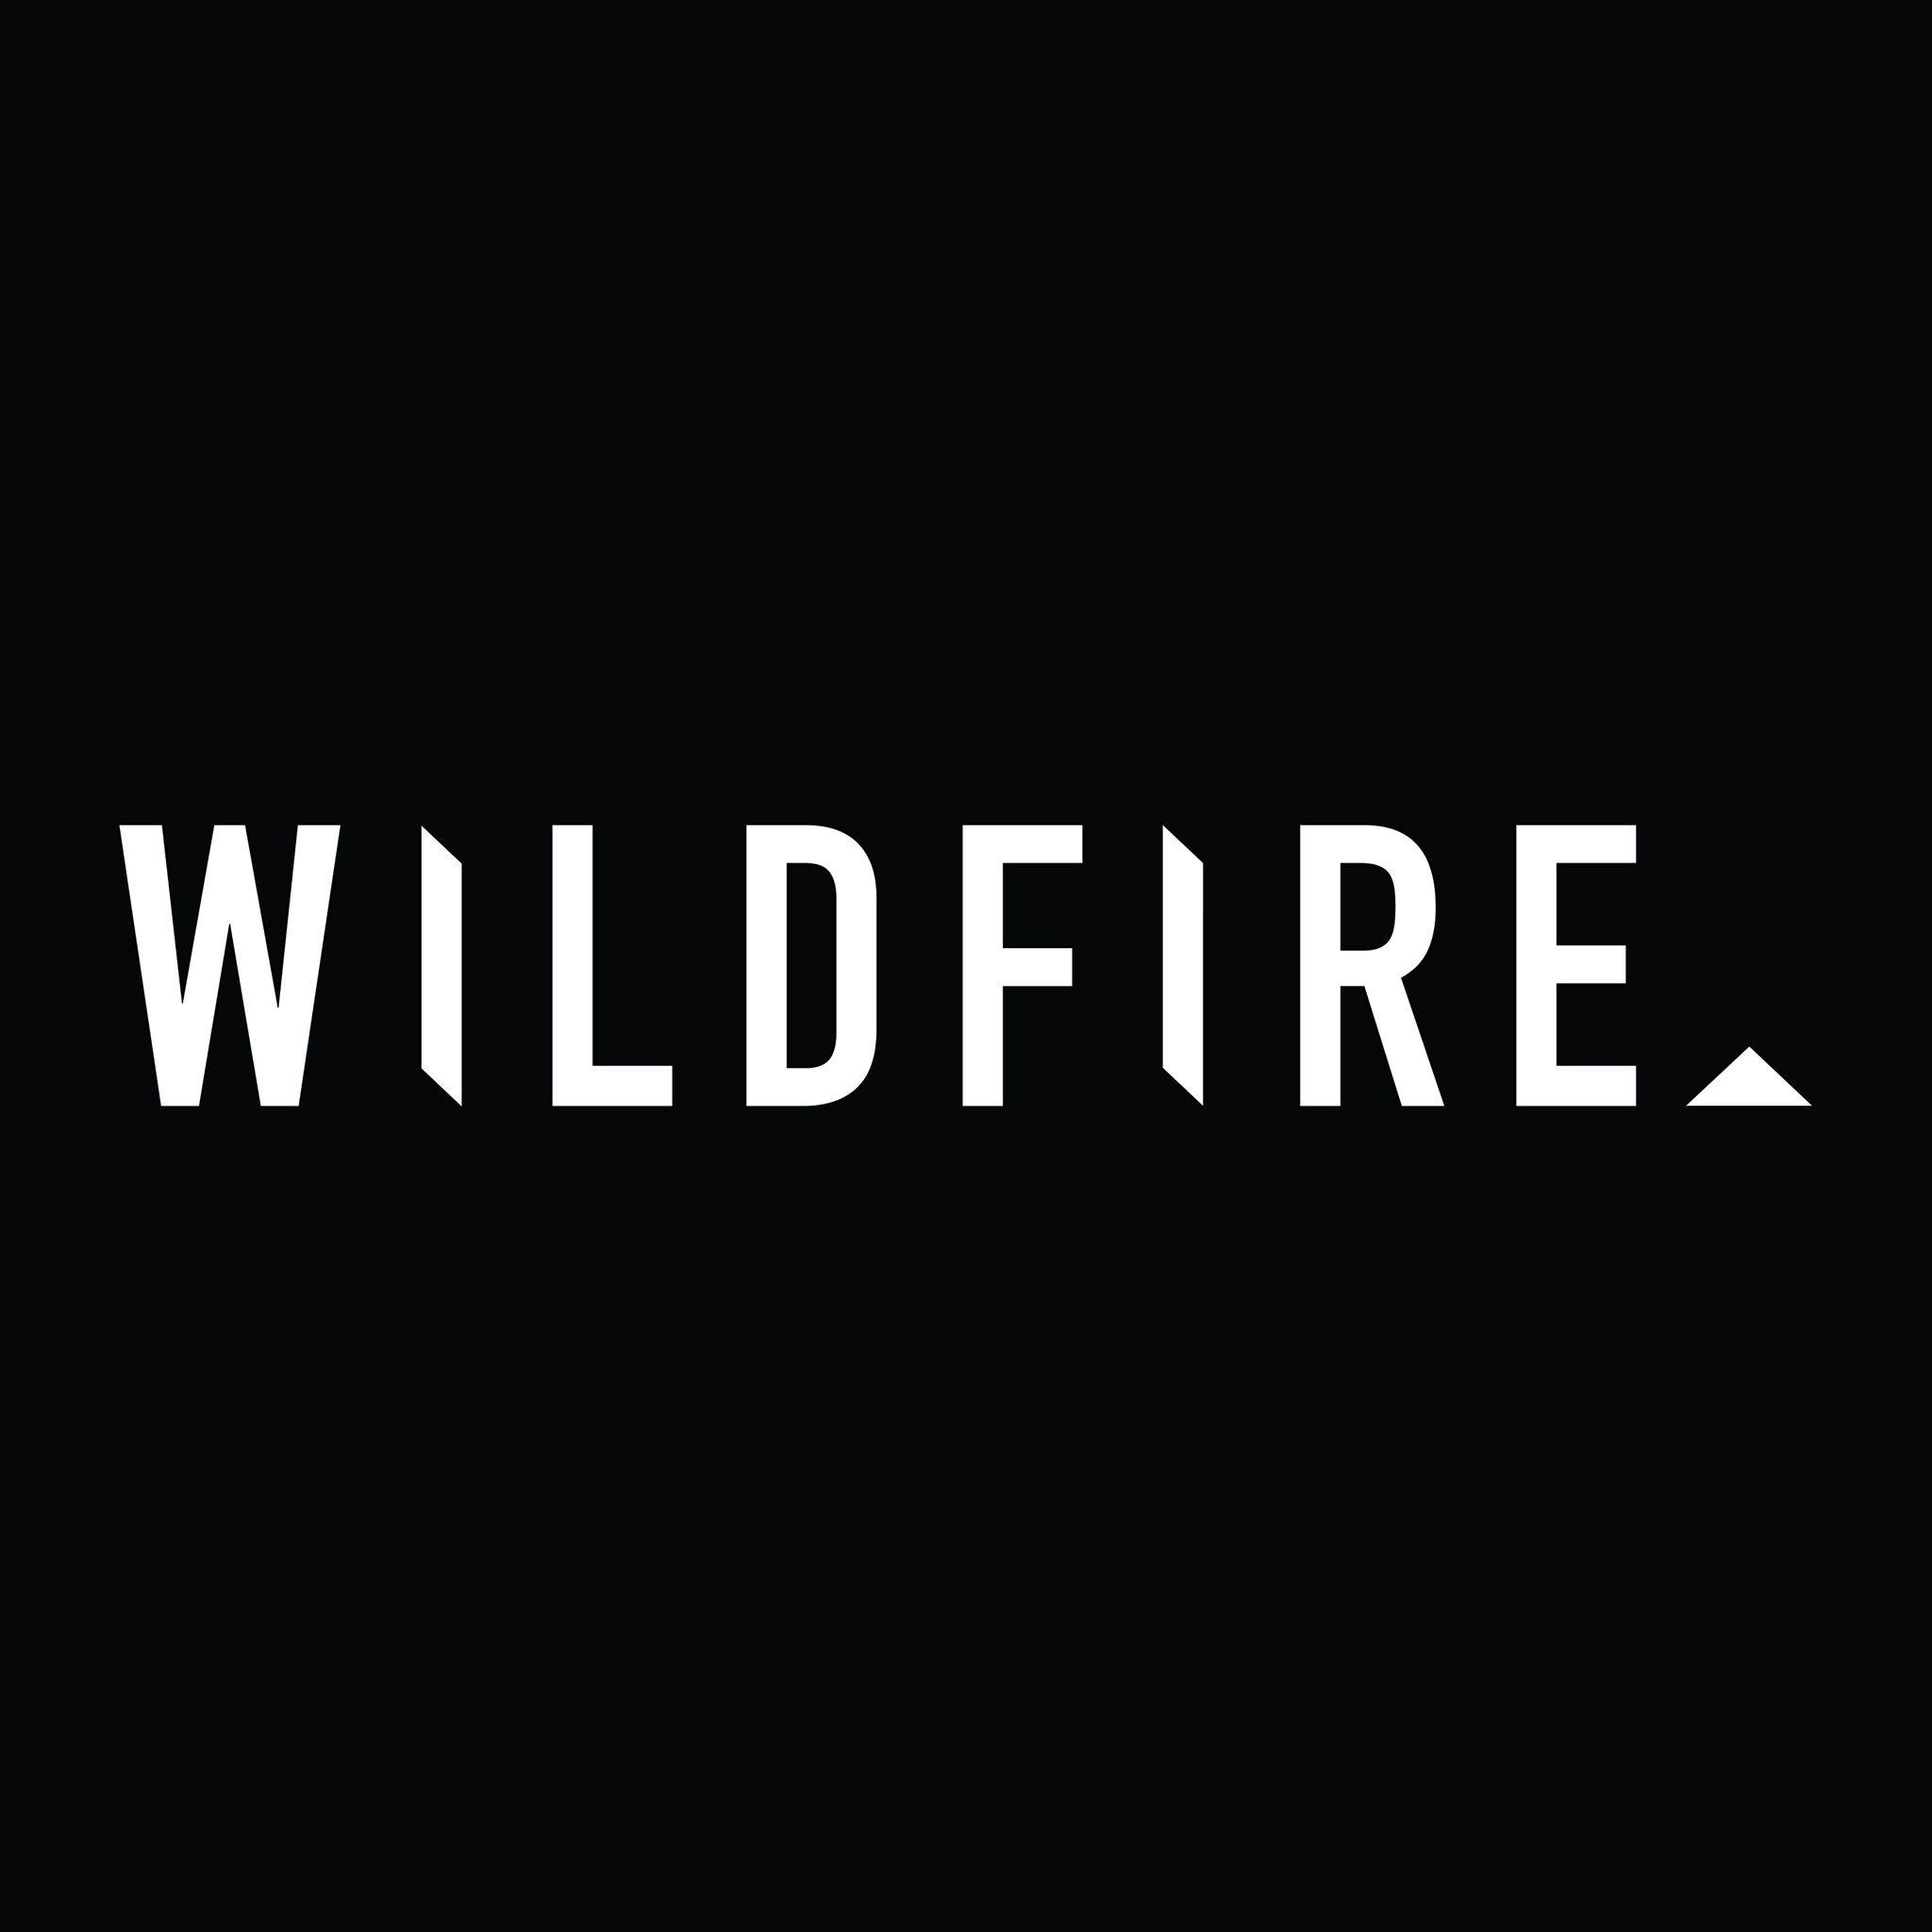 https://www.wildfireshoes.com.au/ Logo